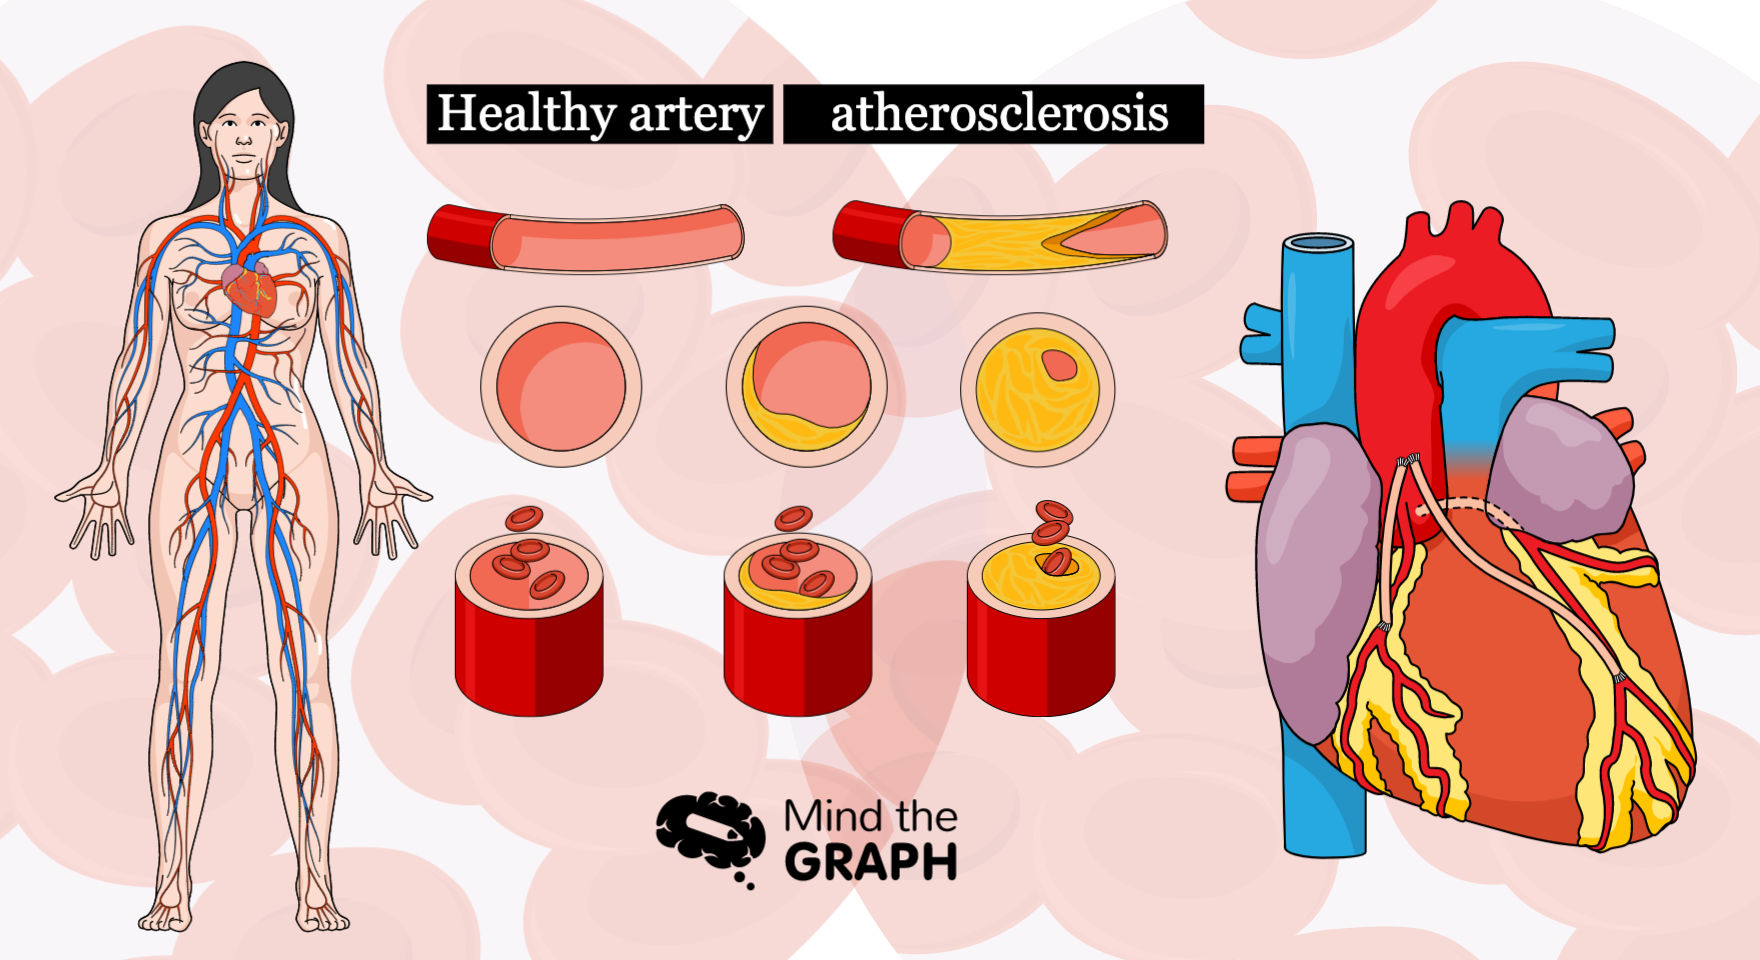 Understanding atherosclerosis through medical illustrations